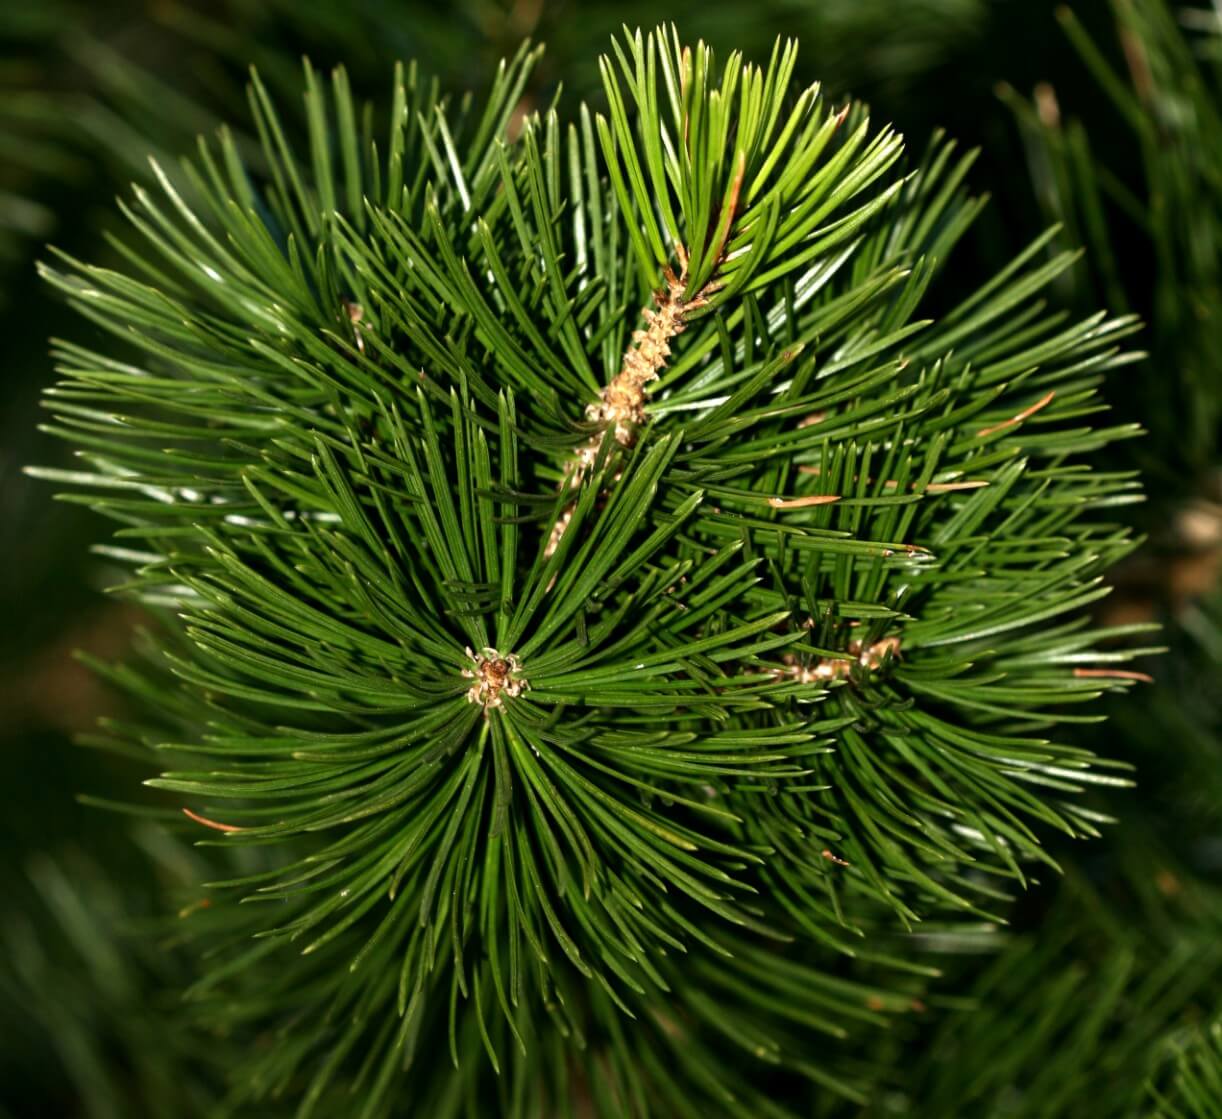 Mexican pinyon pine (Pinus cembroides)